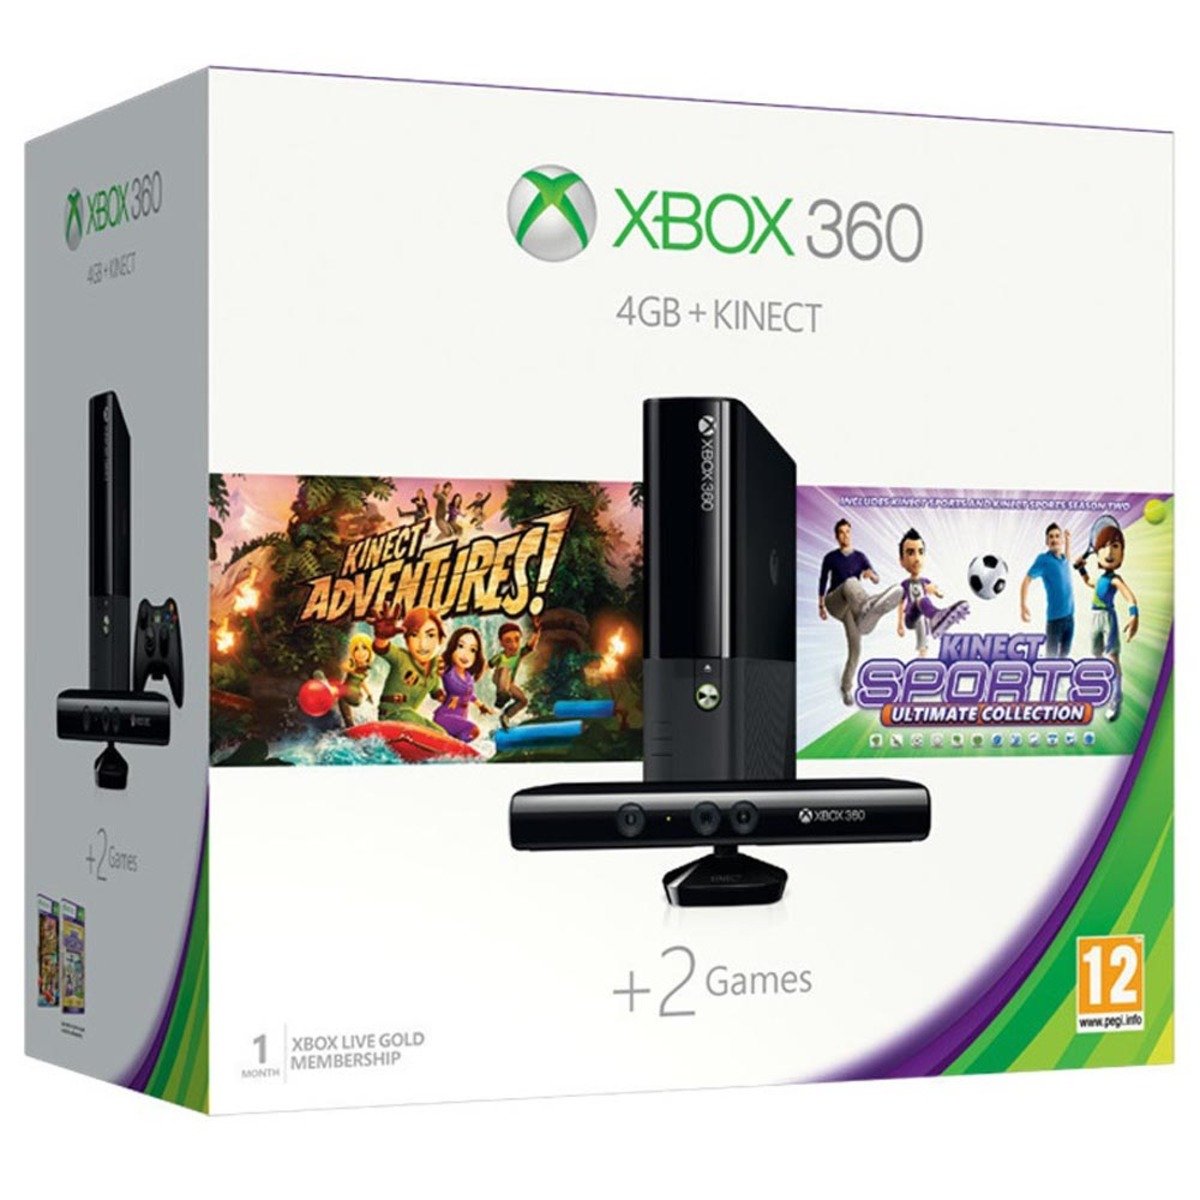 Xbox 360 4GB With Kinect Sensor + Kinect Adventure + Kinect Sport Ultimate